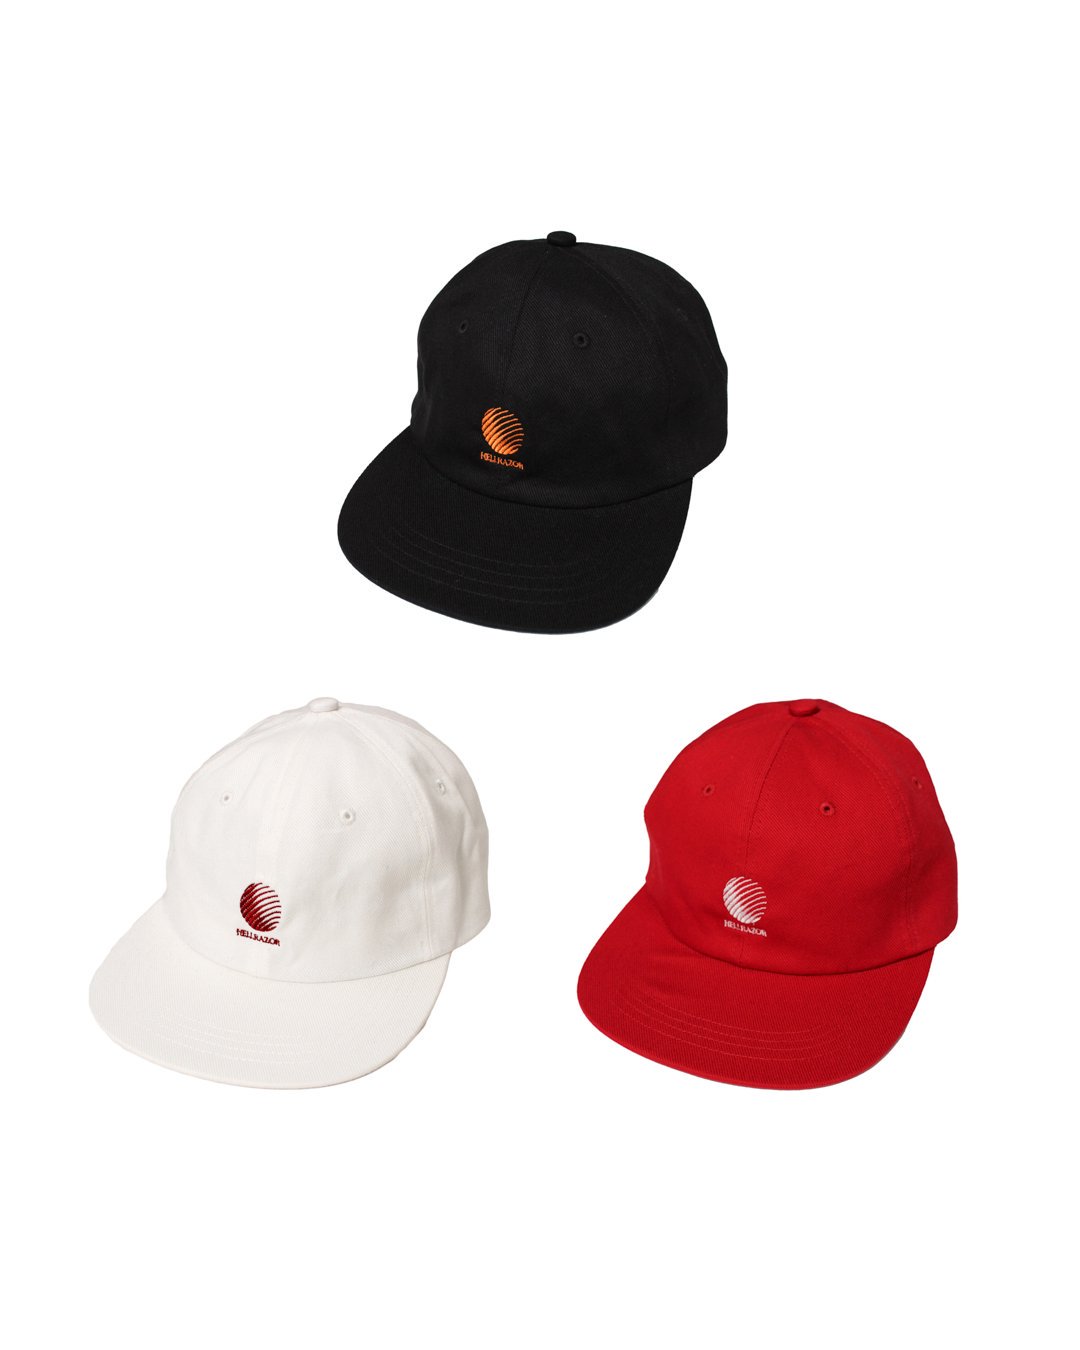 TWILL LOGO 6PANEL CAP - Black, White, Red